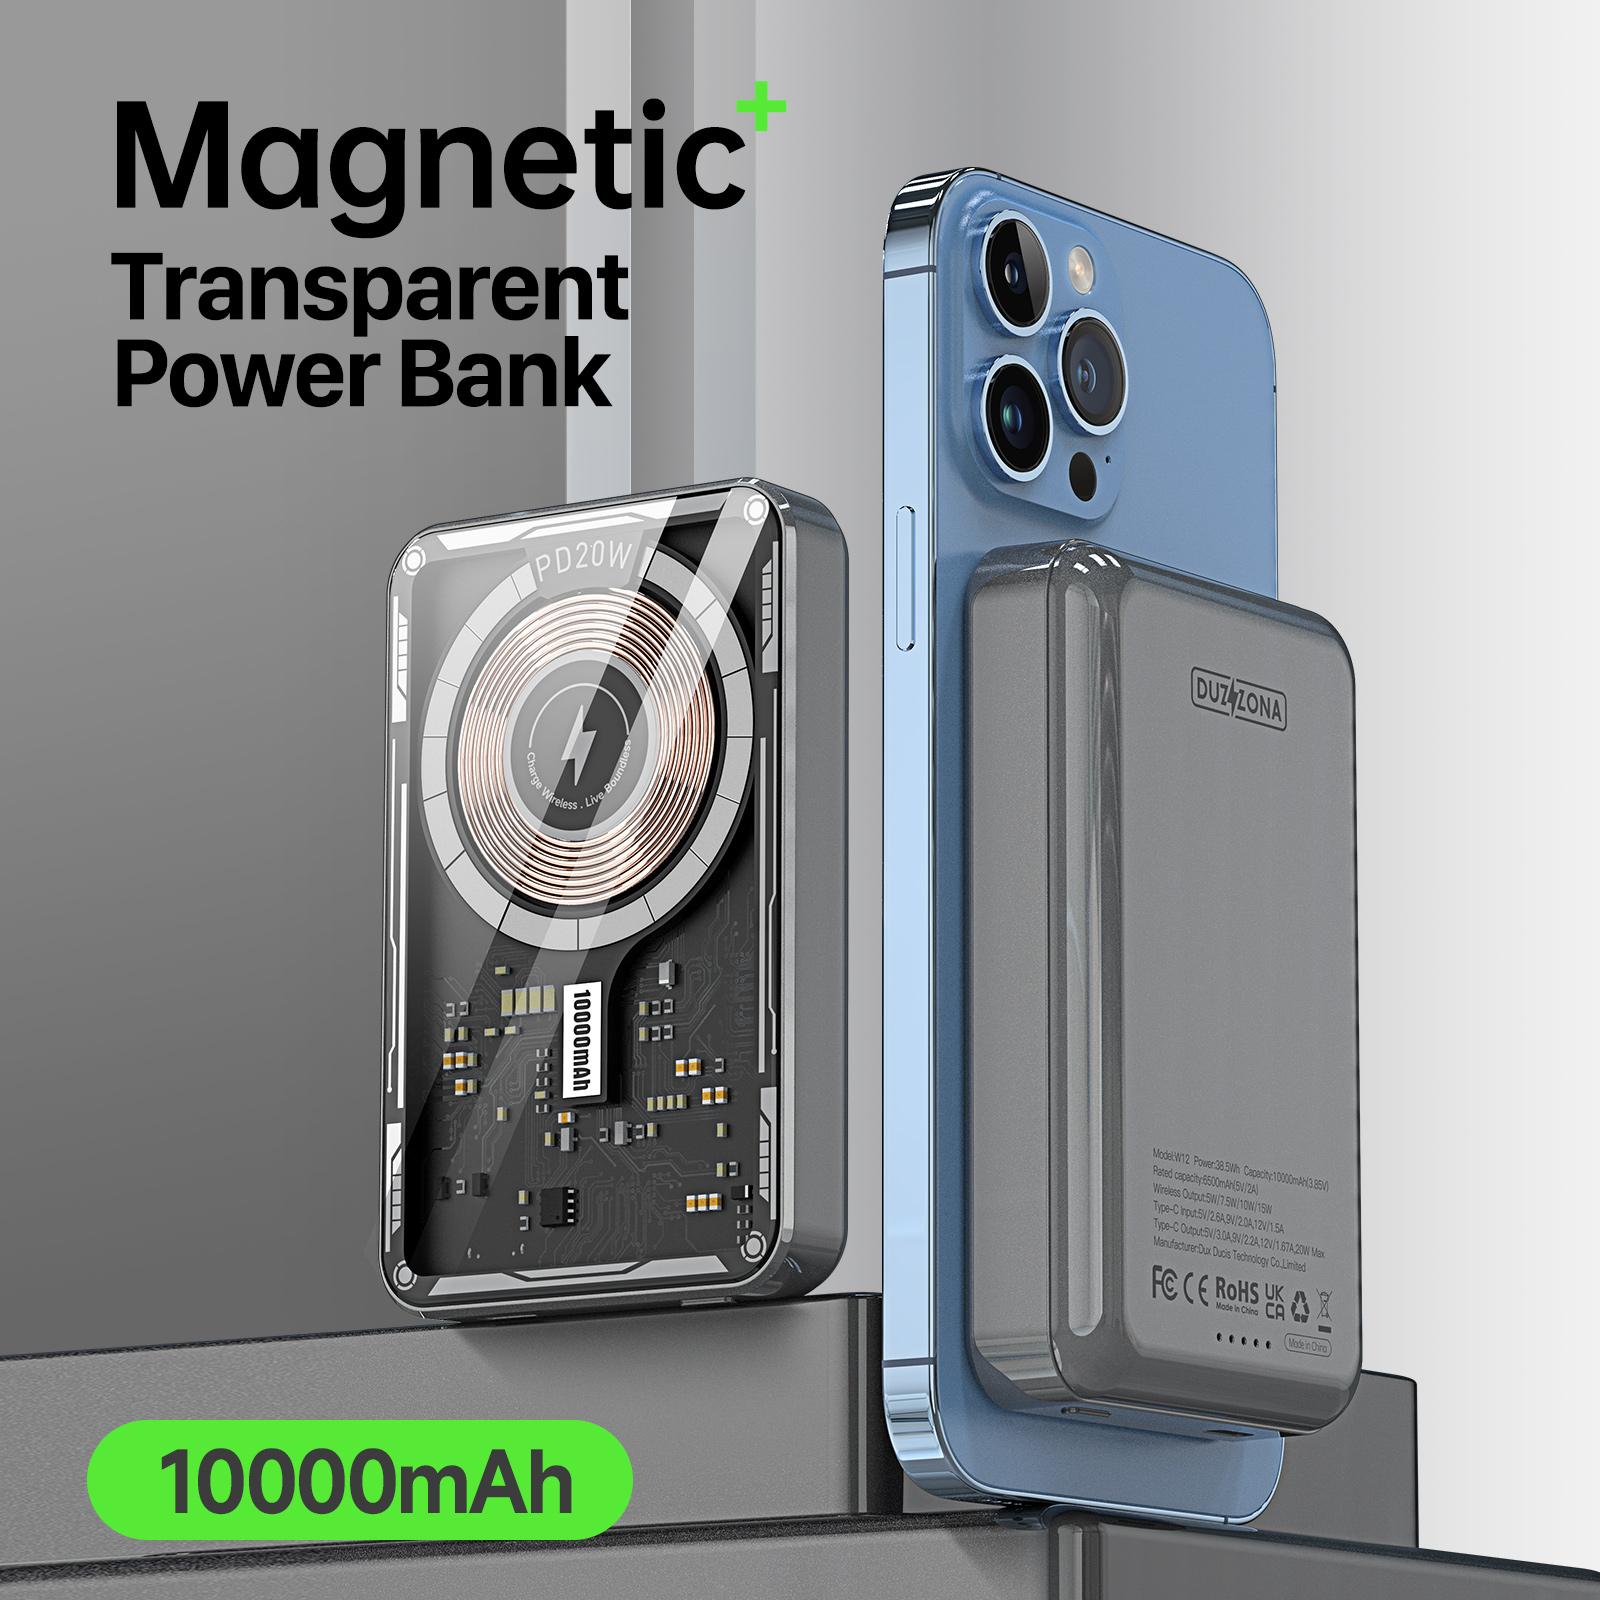 W12 Transparent Magnetic Wireless Power Bank 10000mAh